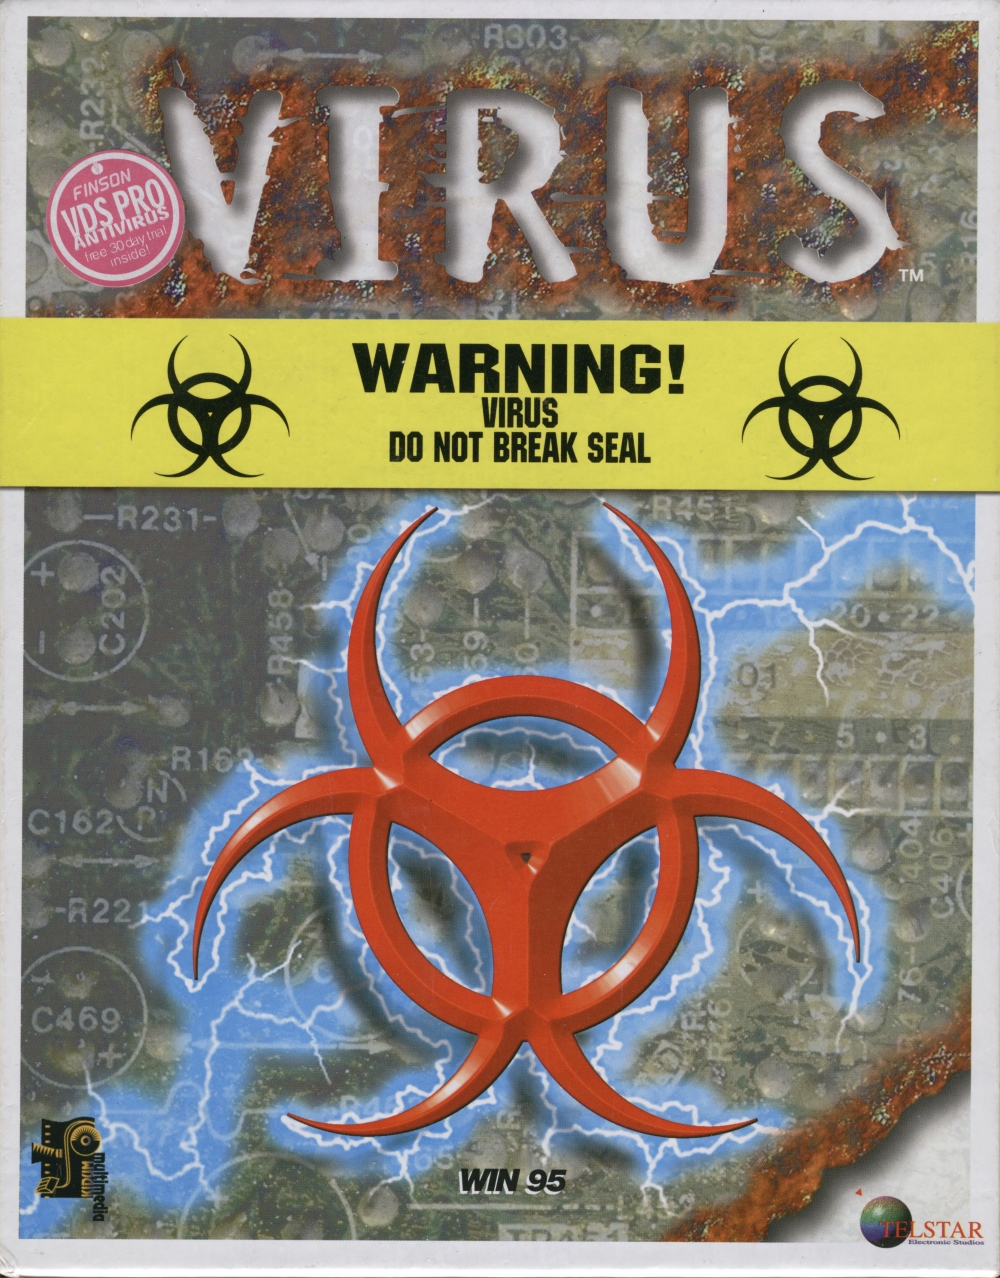 The virus game на русском. The virus game. Virus игра 1997. Старая игра про вирус. The virus game вирус.